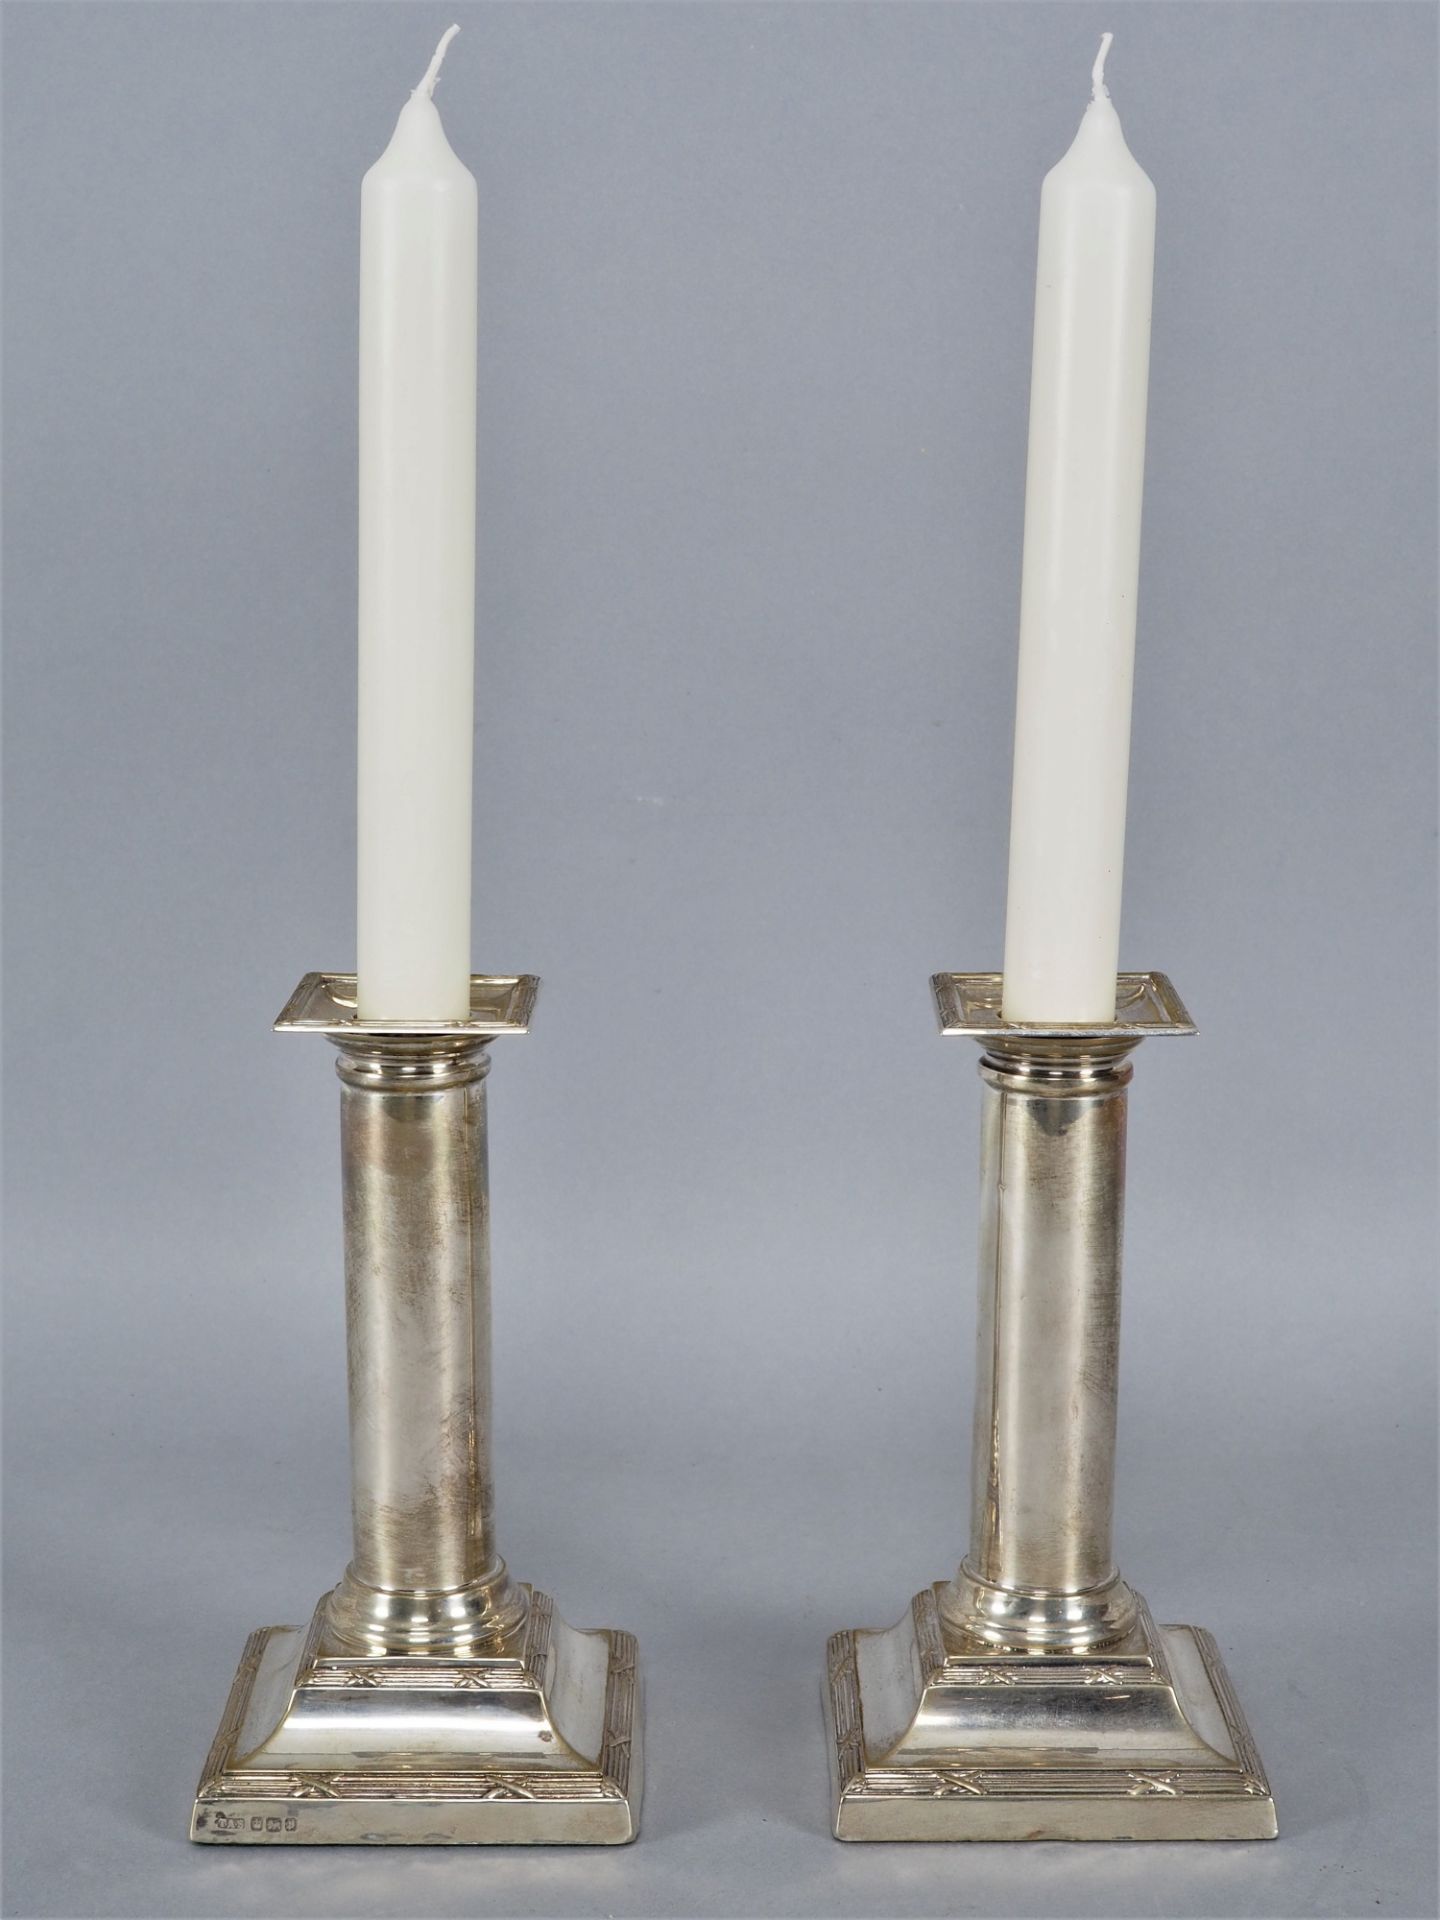 Pair of silver candlesticks, Sheffield - England, c. 1910